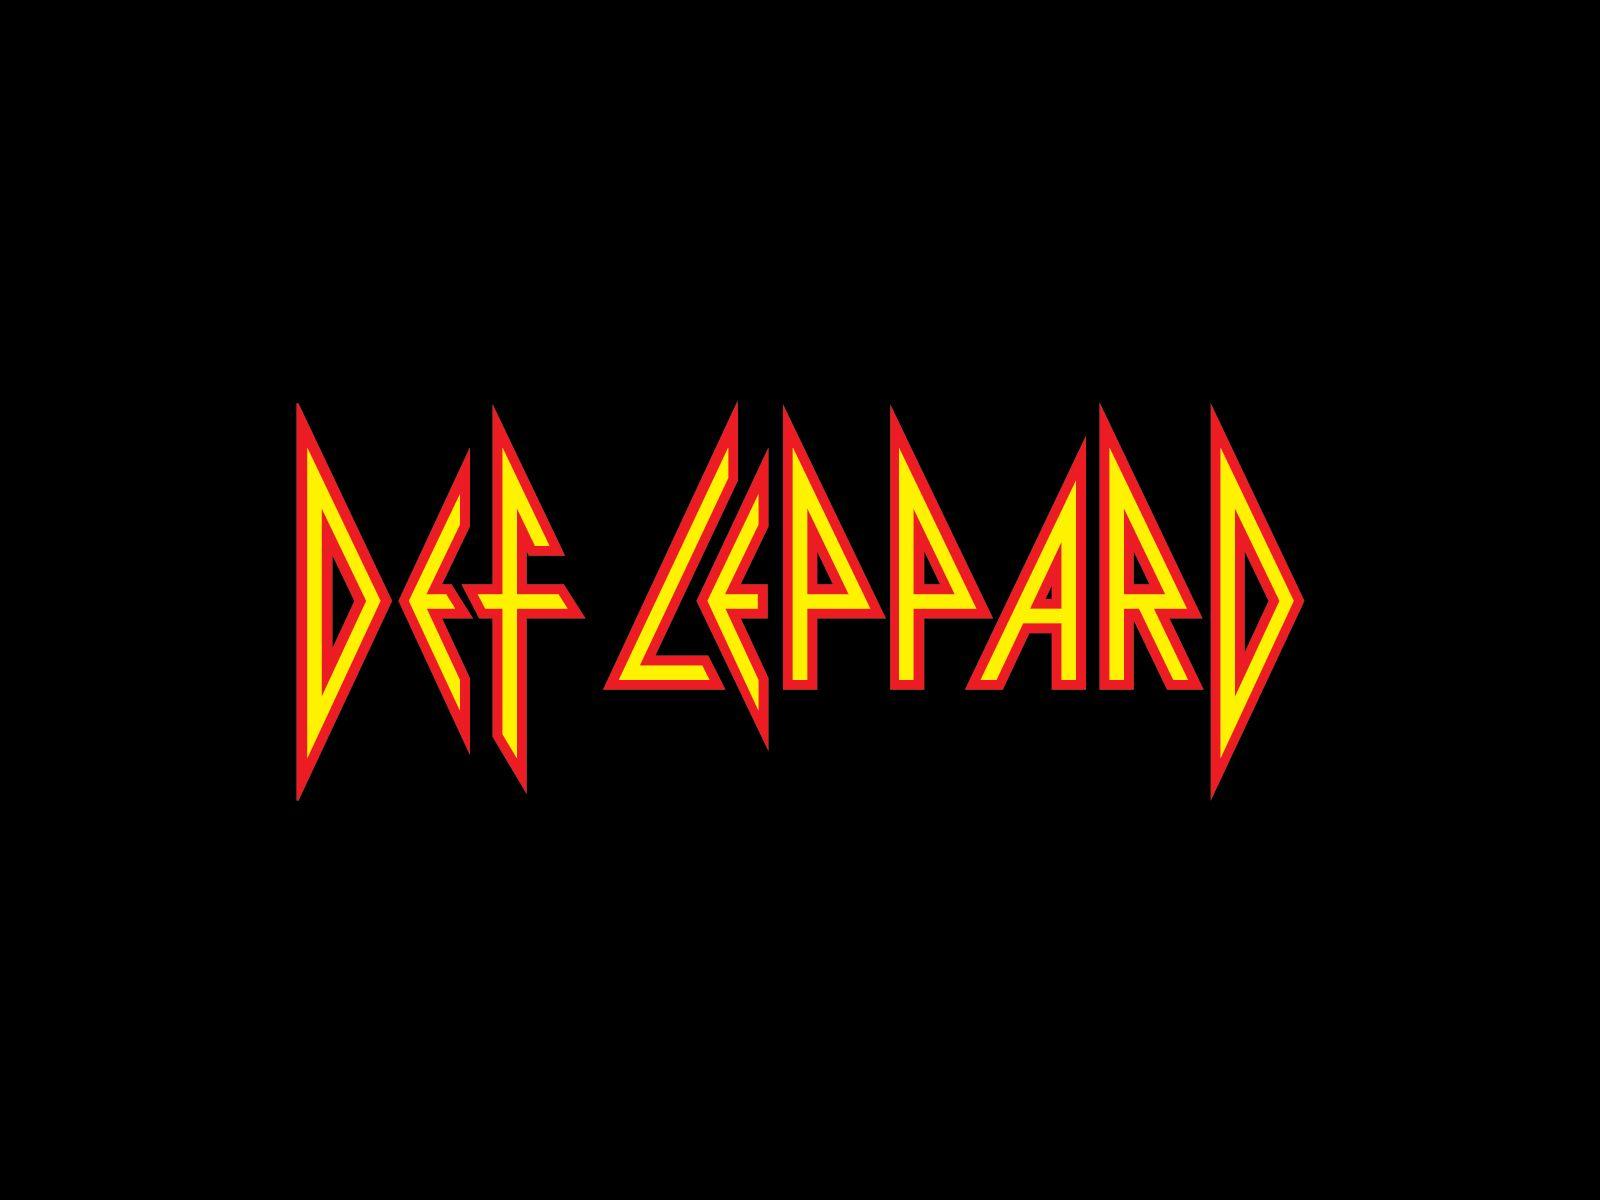 Def Leppard Logo - Def Leppard logo and wallpaper | CONCERTS | Pinterest | Def Leppard ...